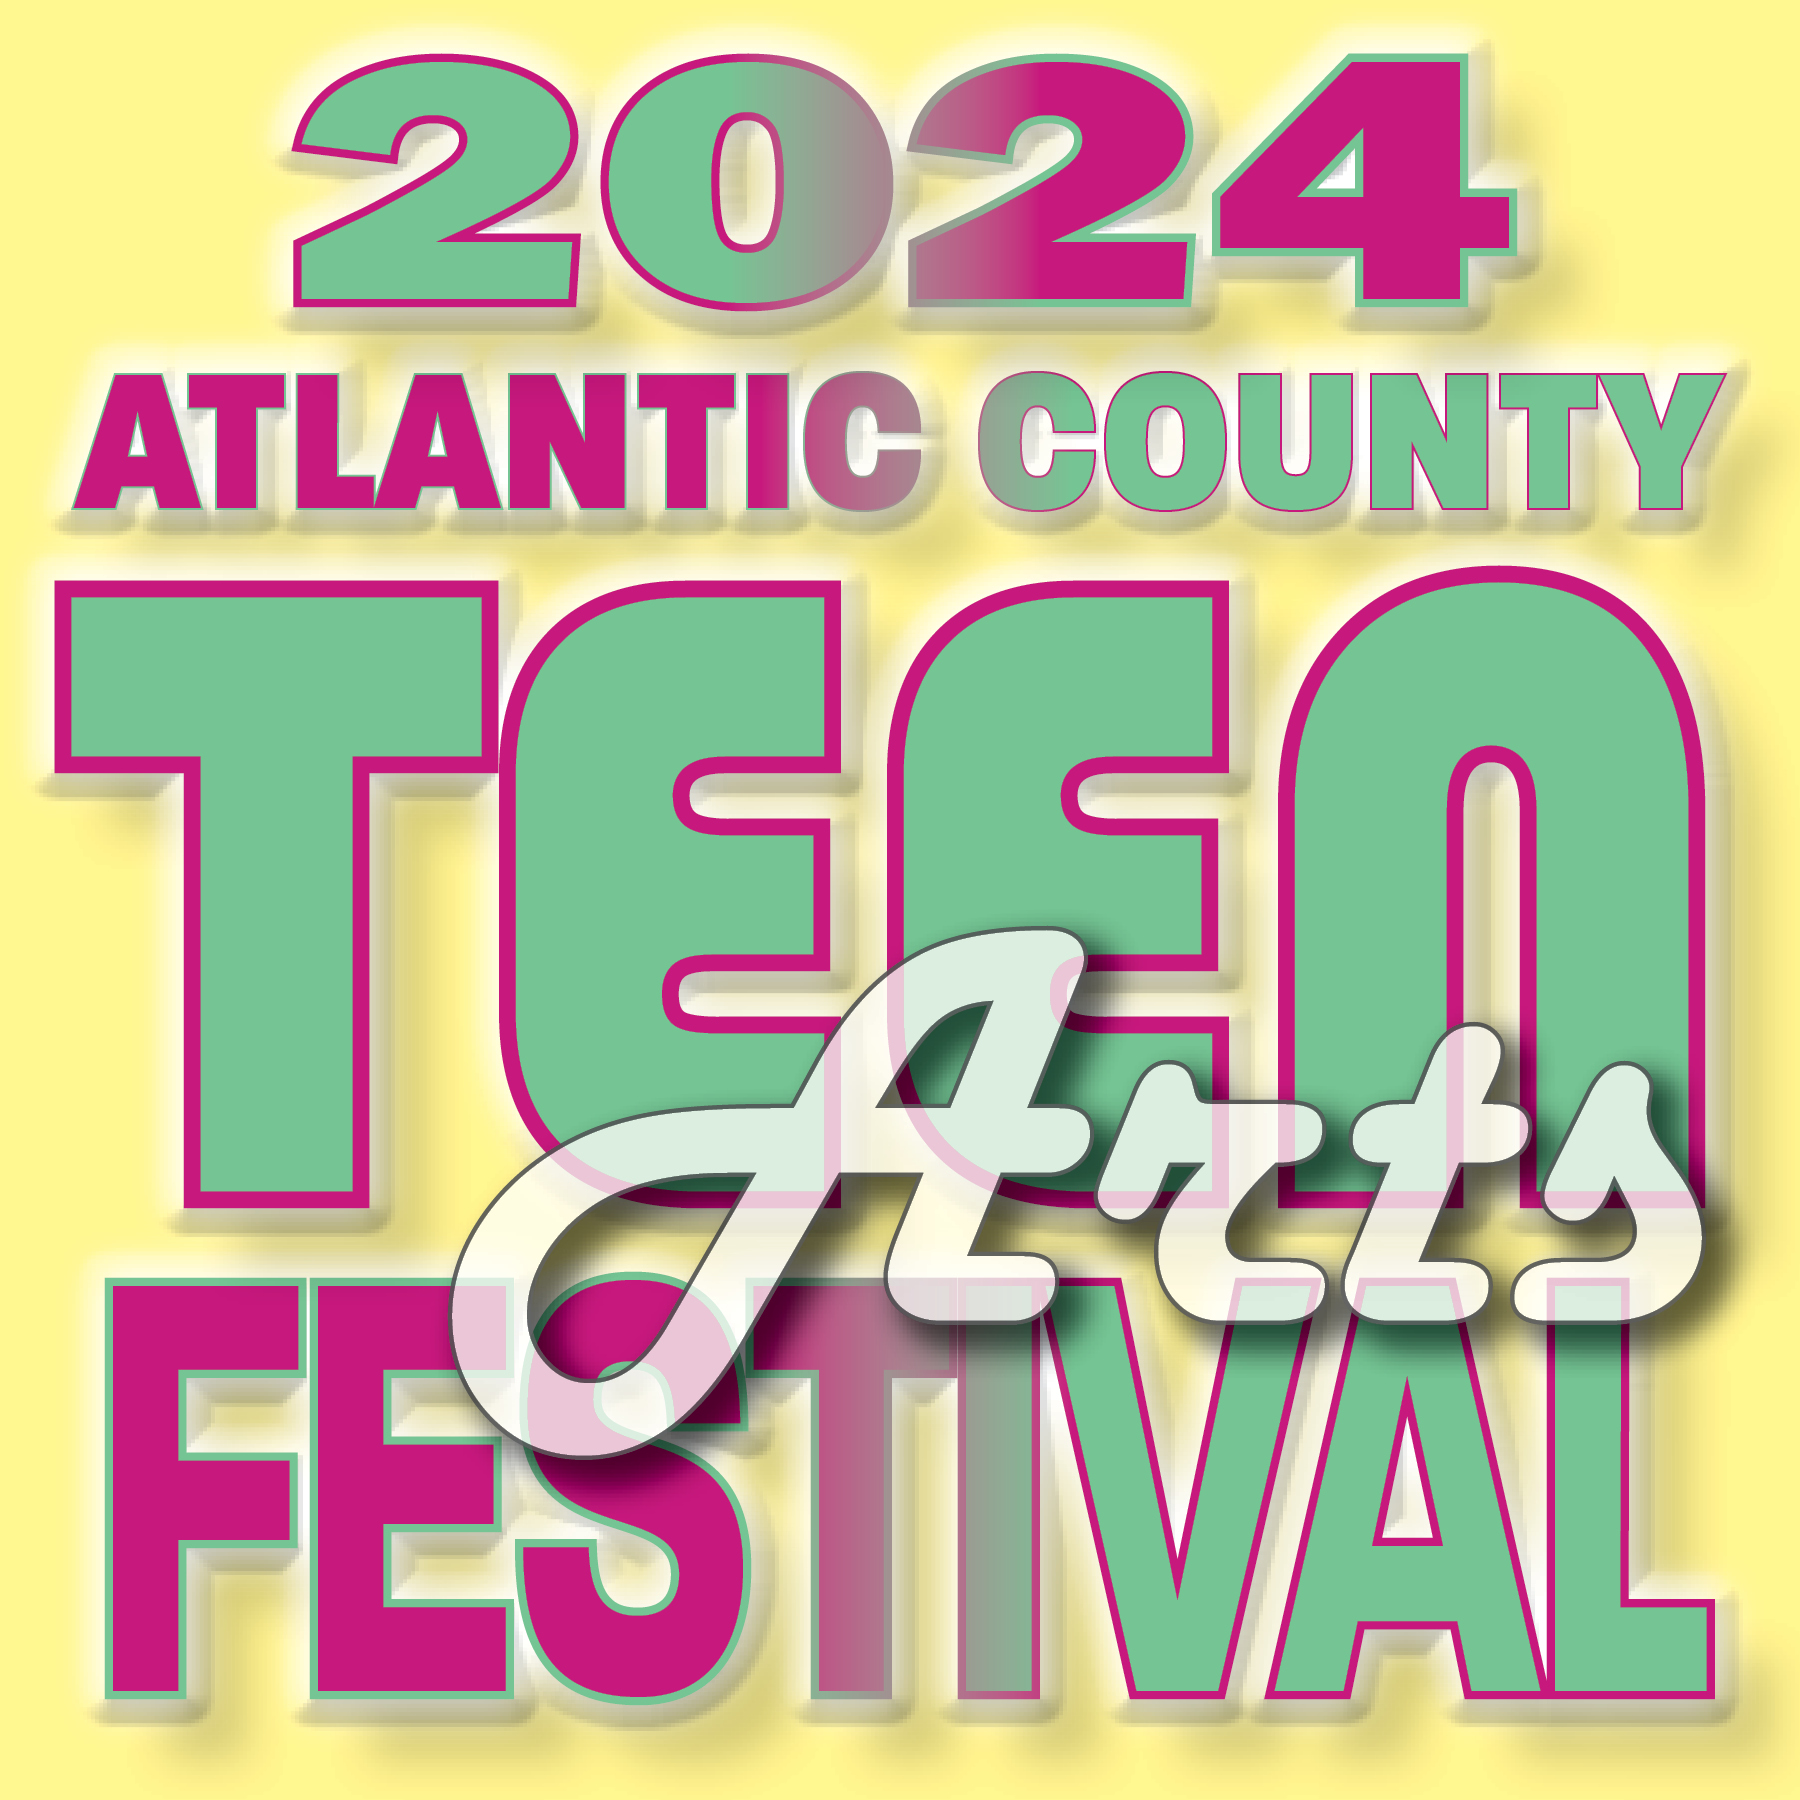 2024 Atlantic County
Virtual Teen Arts Festival